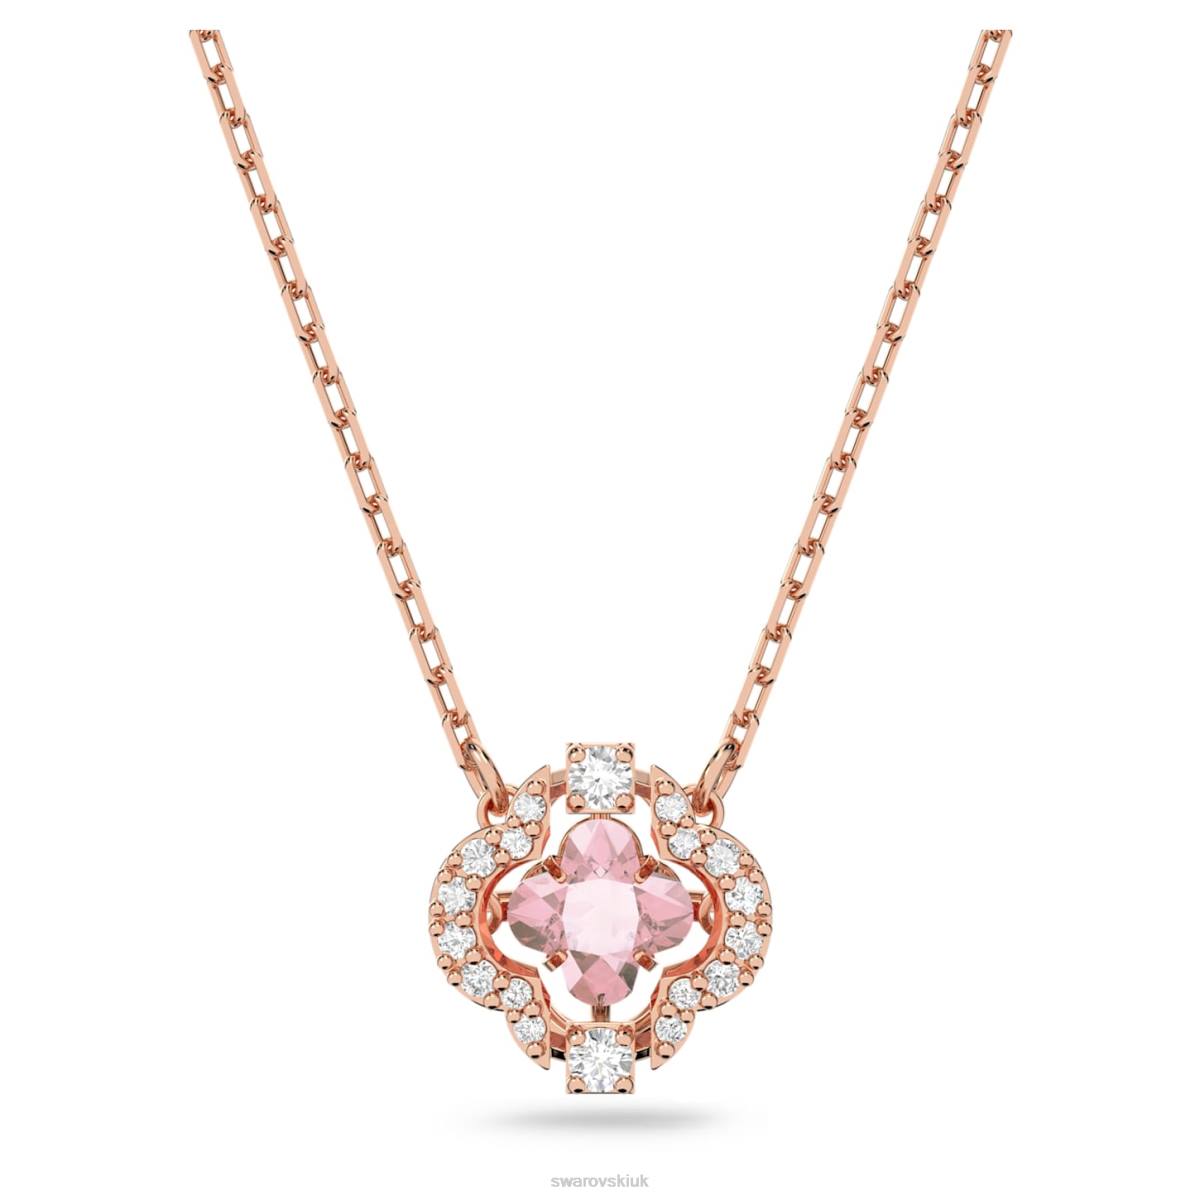 Jewelry Swarovski Sparkling Dance necklace Clover, Pink, Rose gold-tone plated 48JX82